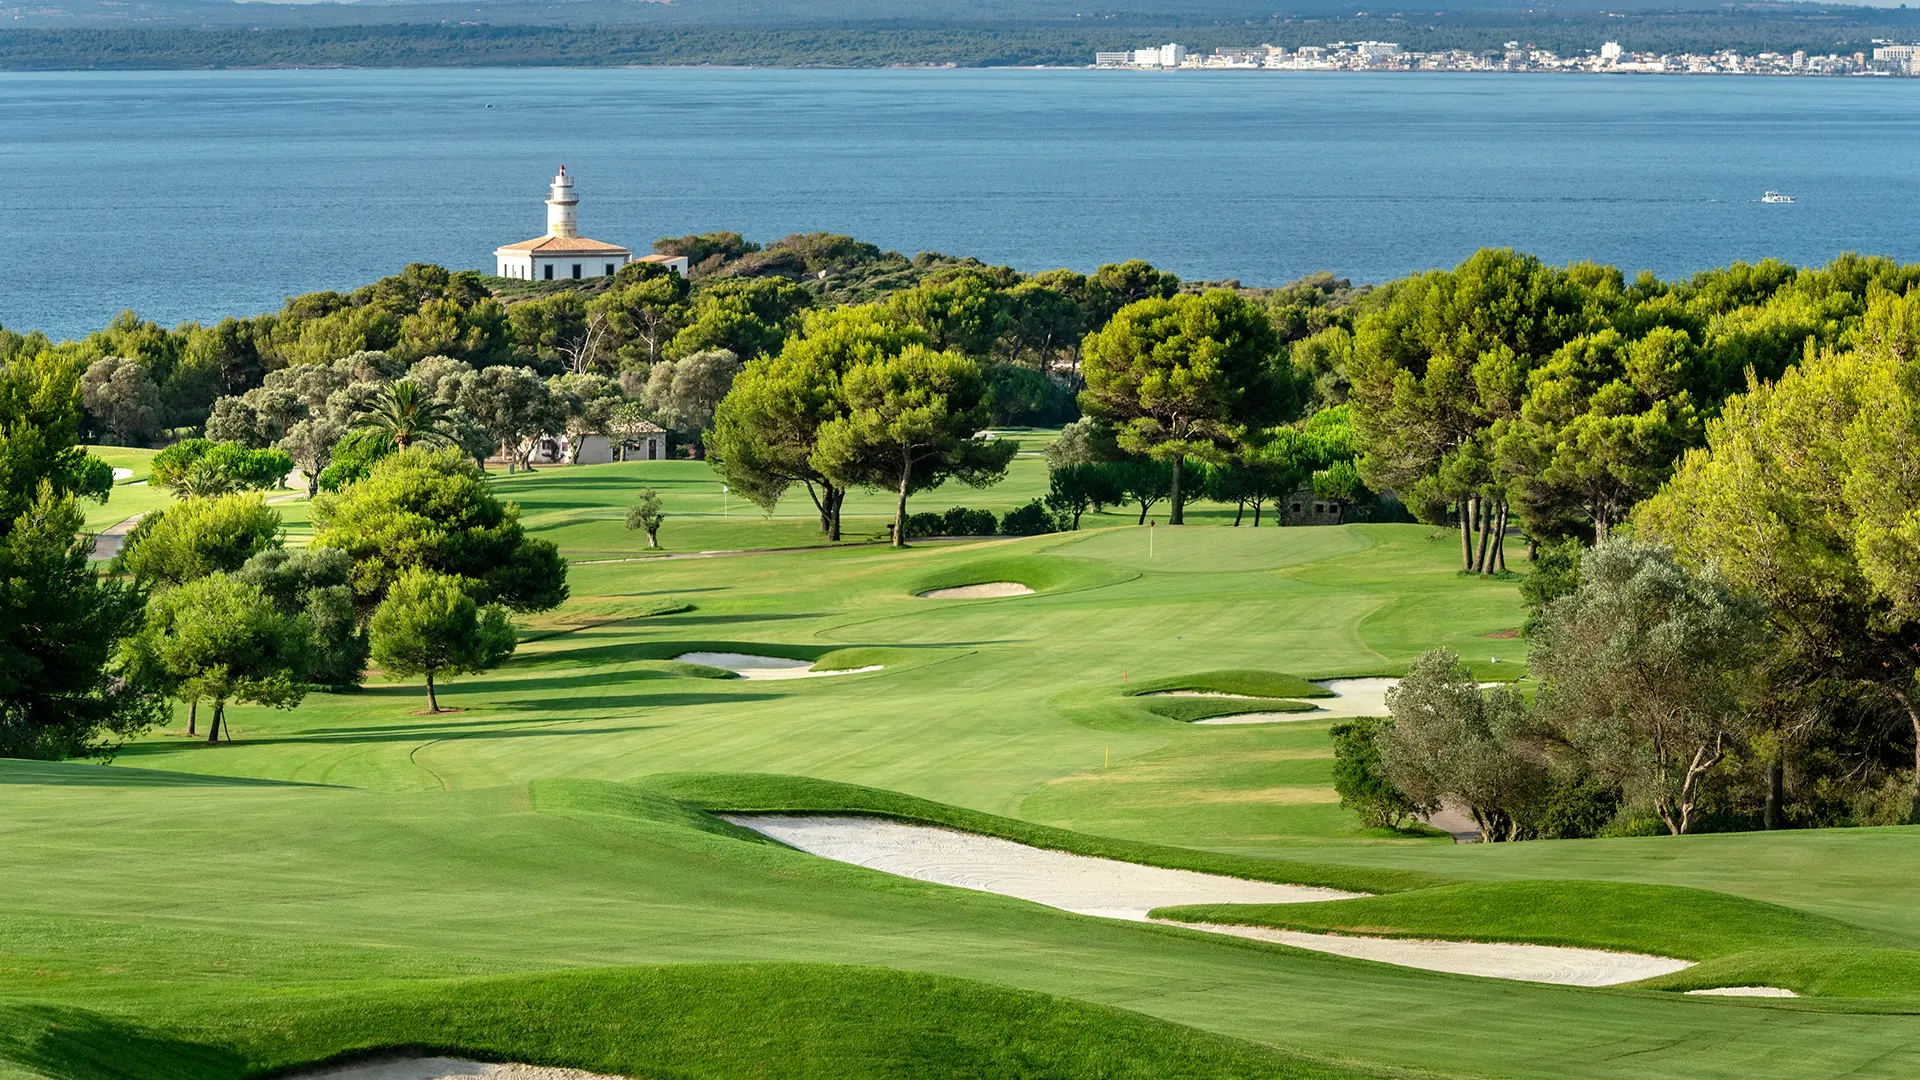 Spain golf holidays - Fuerte Marbella Spain - Photo 3